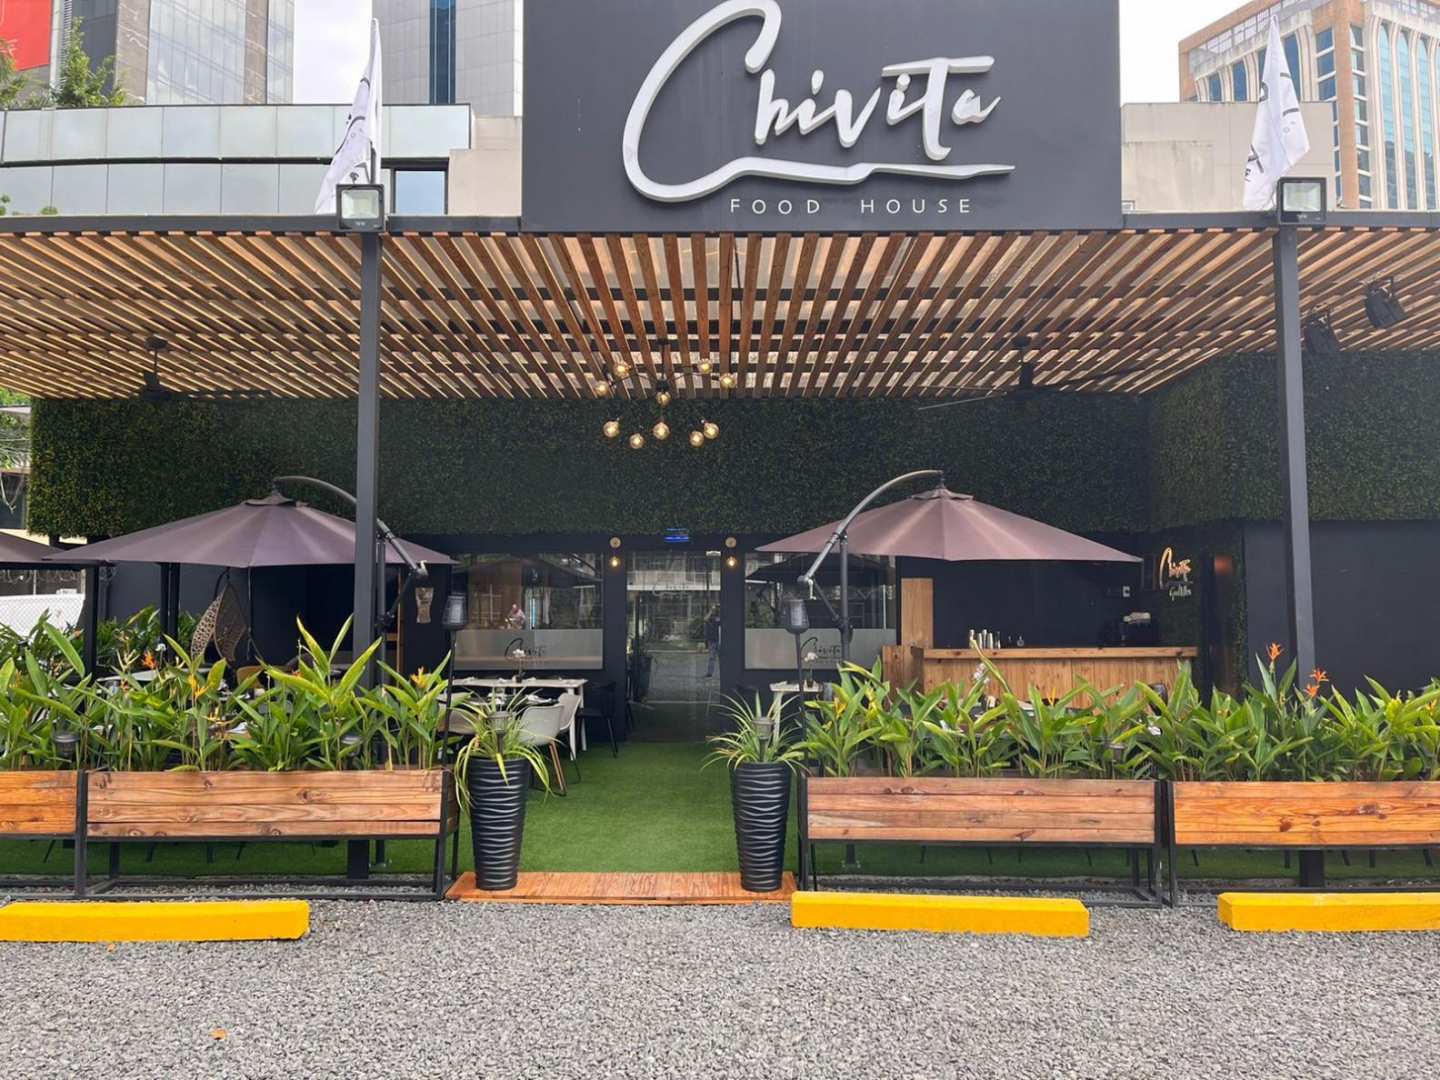 Chivita Food House